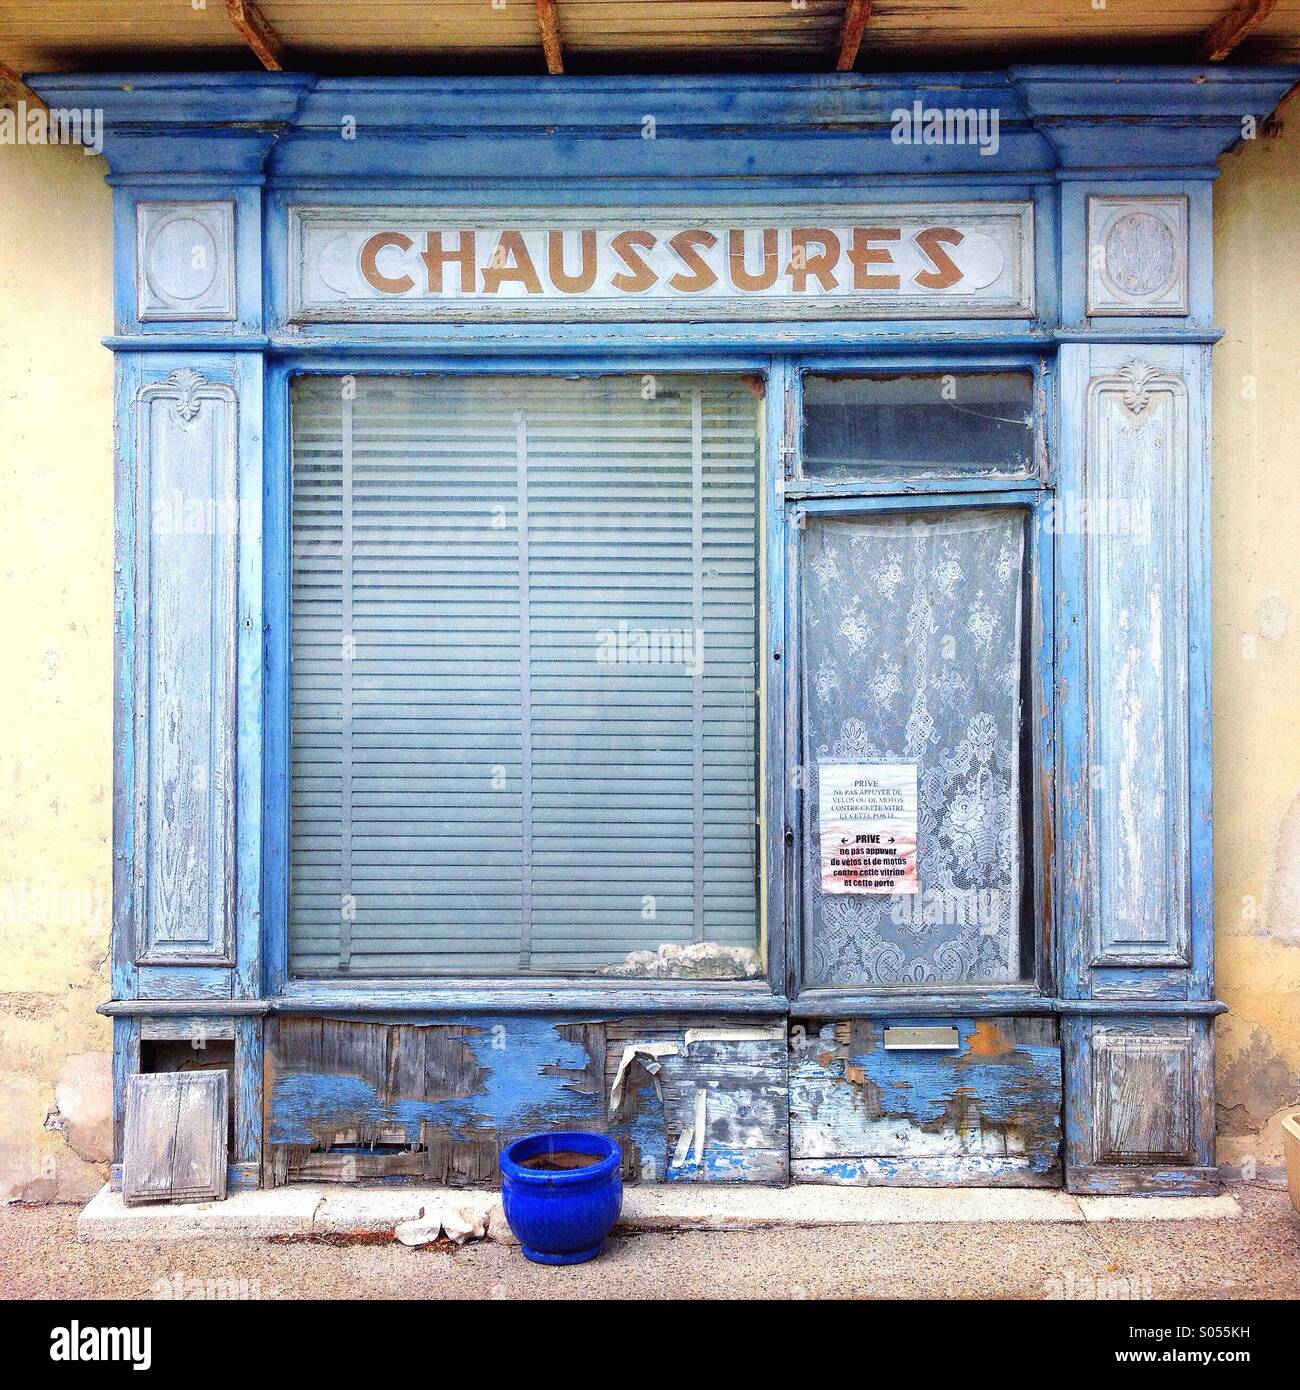 Vecchio abbandonato storefront, calzatura store, Sault, Vaucluse, Provence-Alpes-Côte d'Azur, in Francia Foto Stock